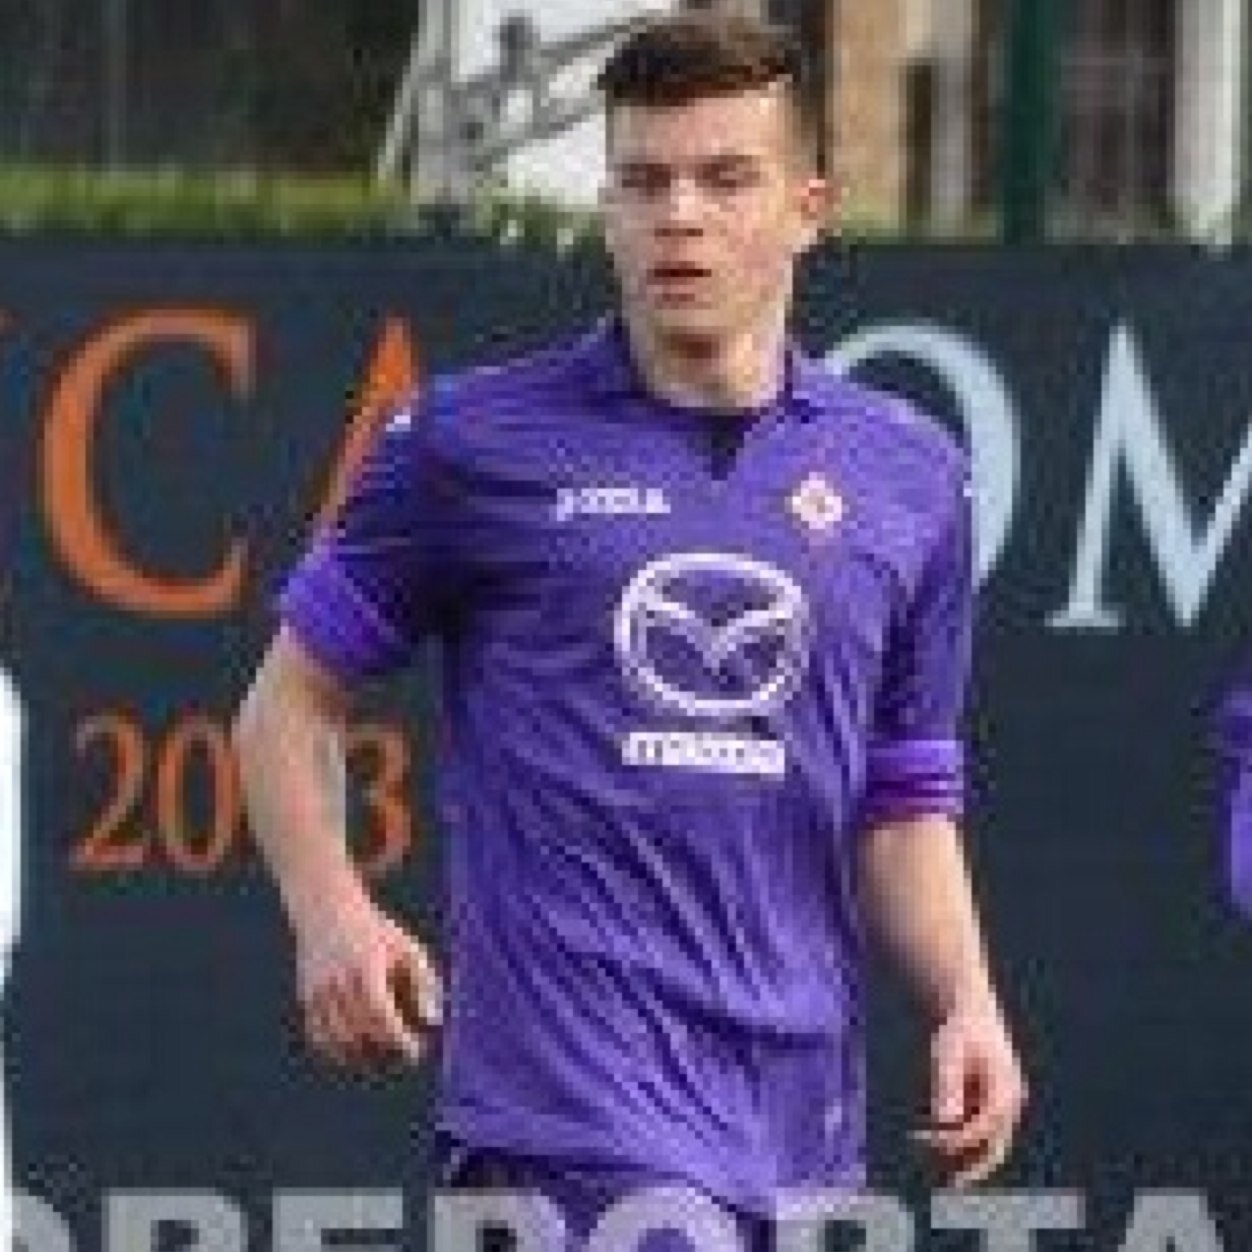 Official Footballplayer - Acf Fiorentina / Serbian International u17's